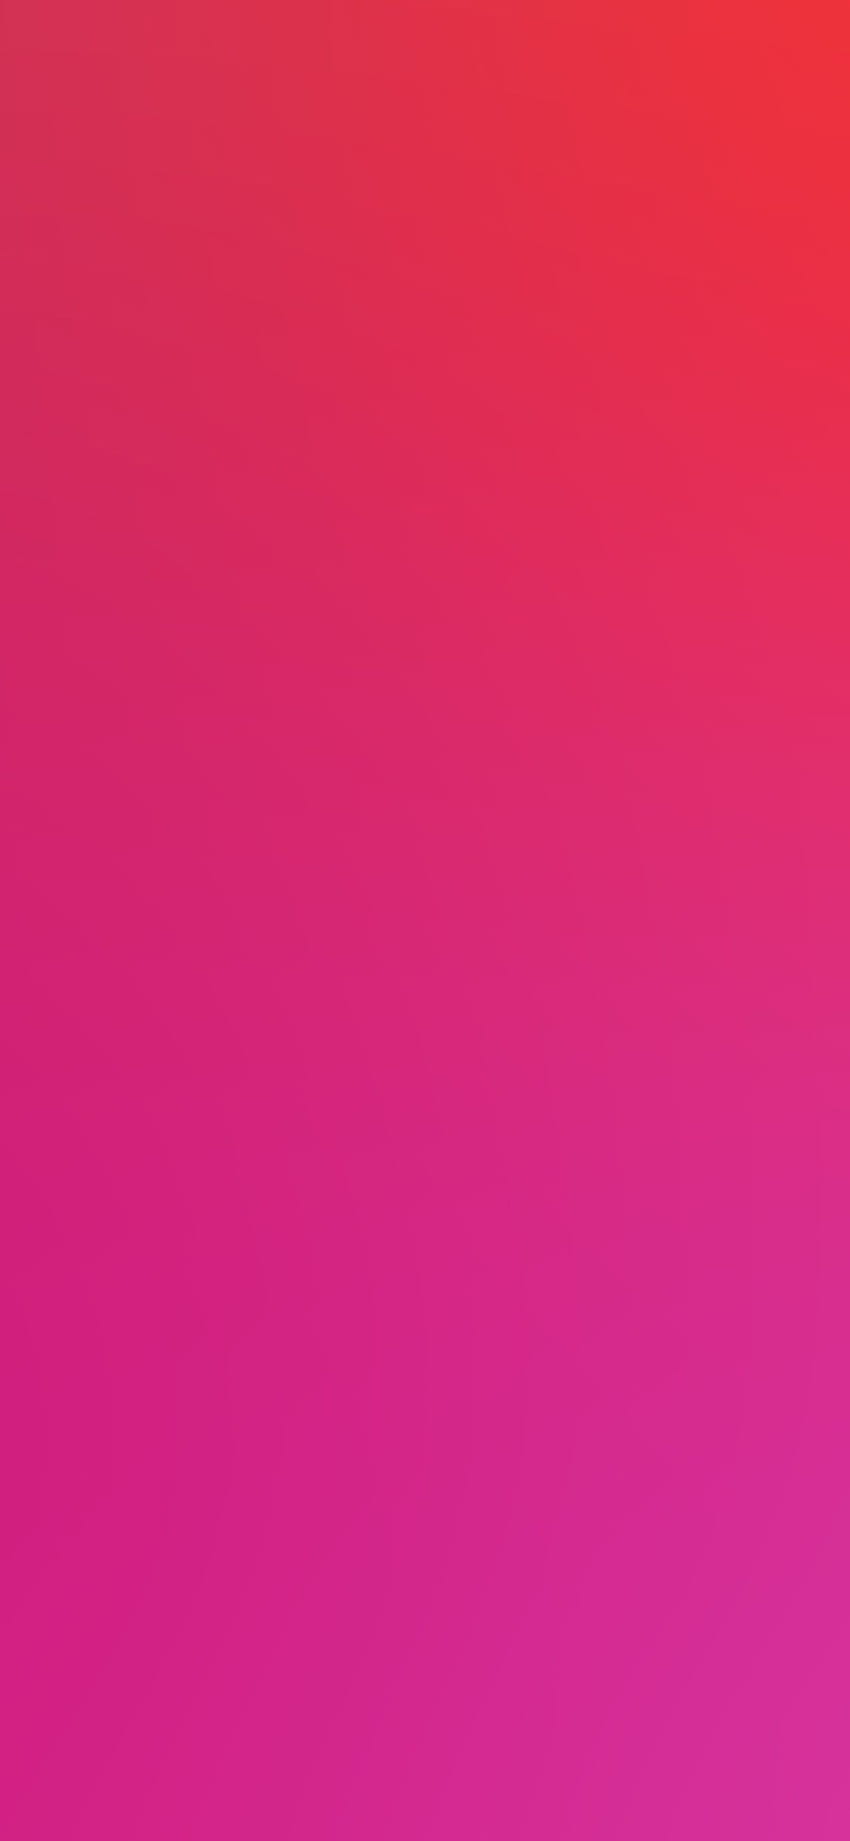 iPhoneX. gradación de desenfoque rojo rosa intenso, Granate fondo de pantalla del teléfono